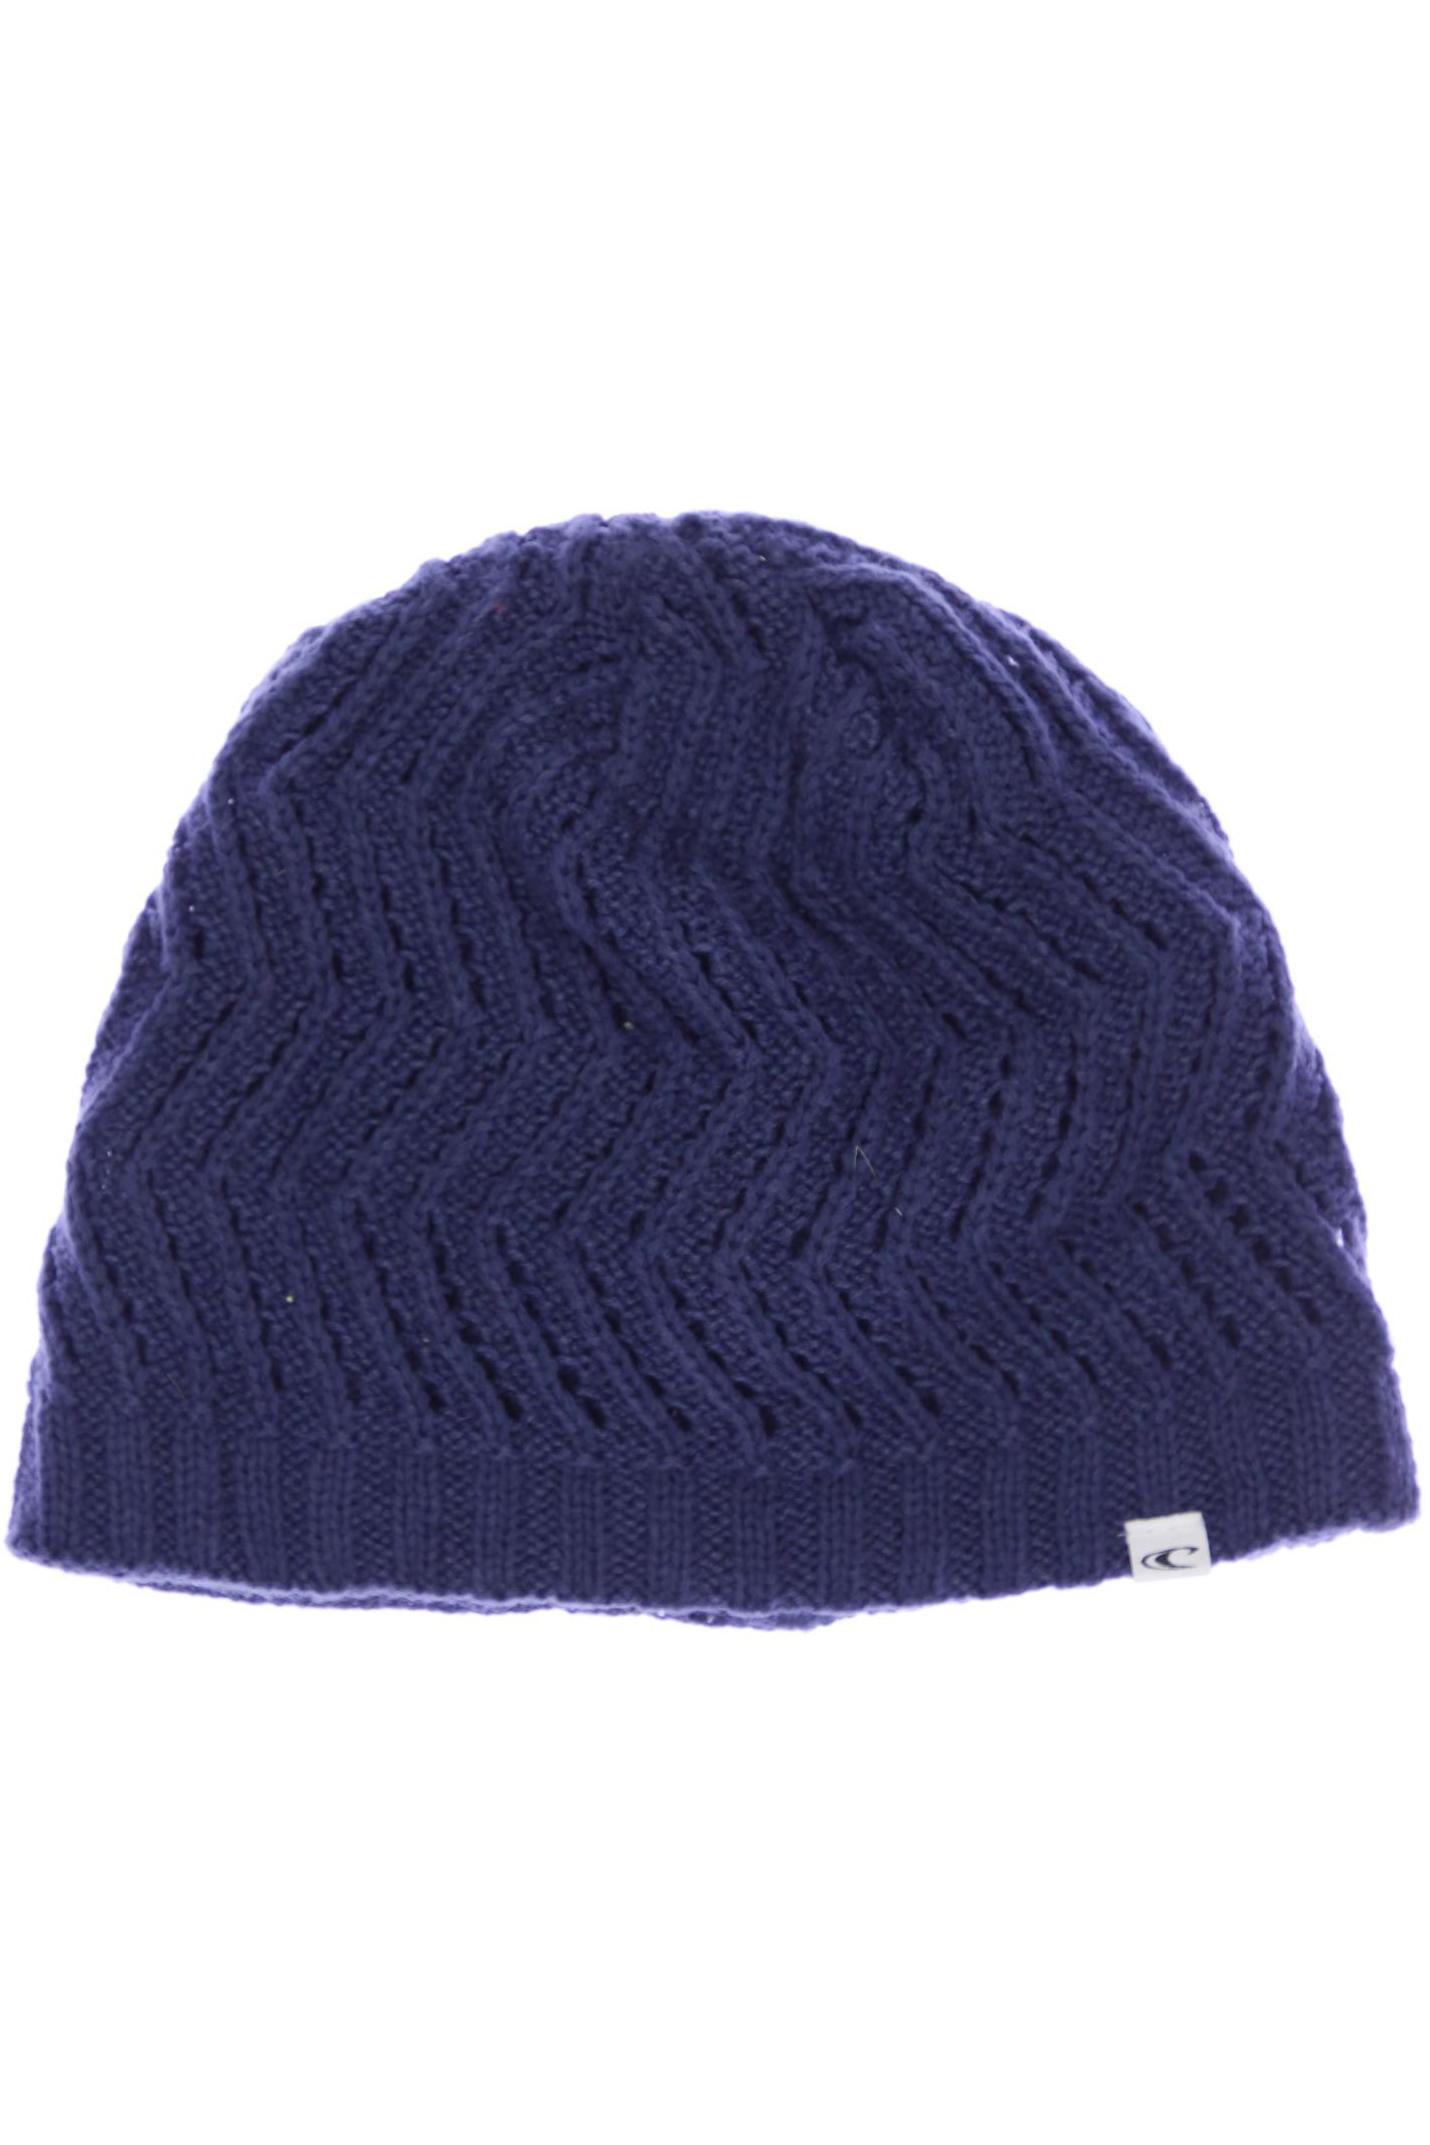 O Neill Damen Hut/Mütze, marineblau von O Neill